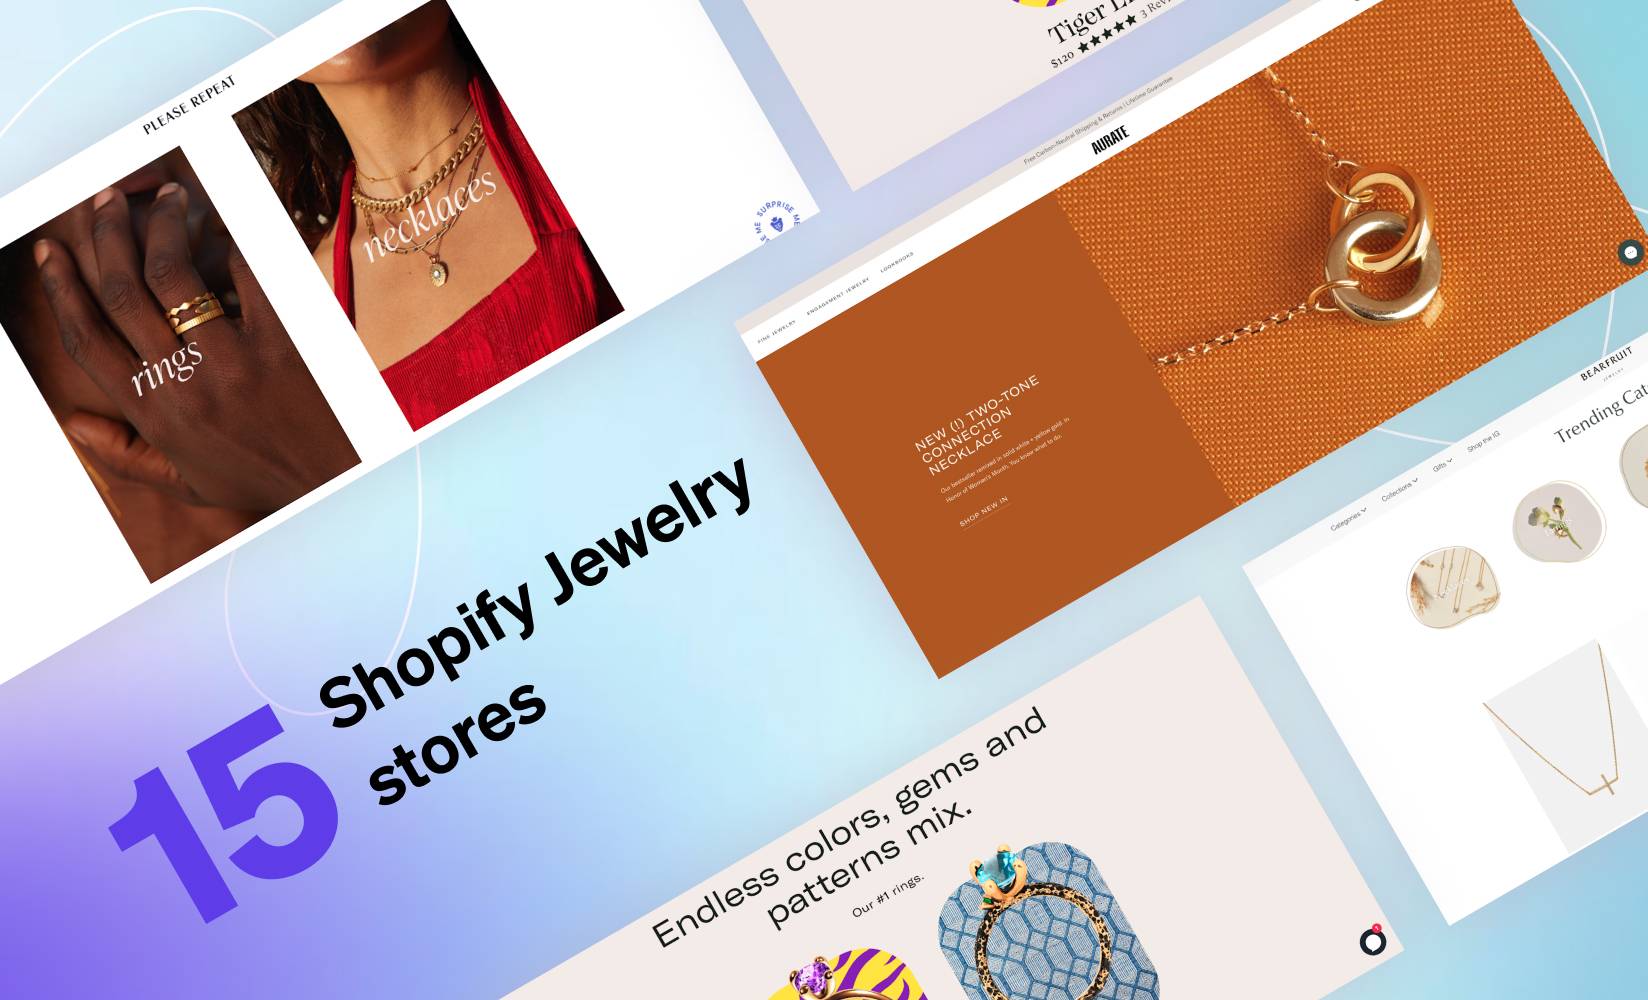 Gems and Jewelry Companies - Top Company List